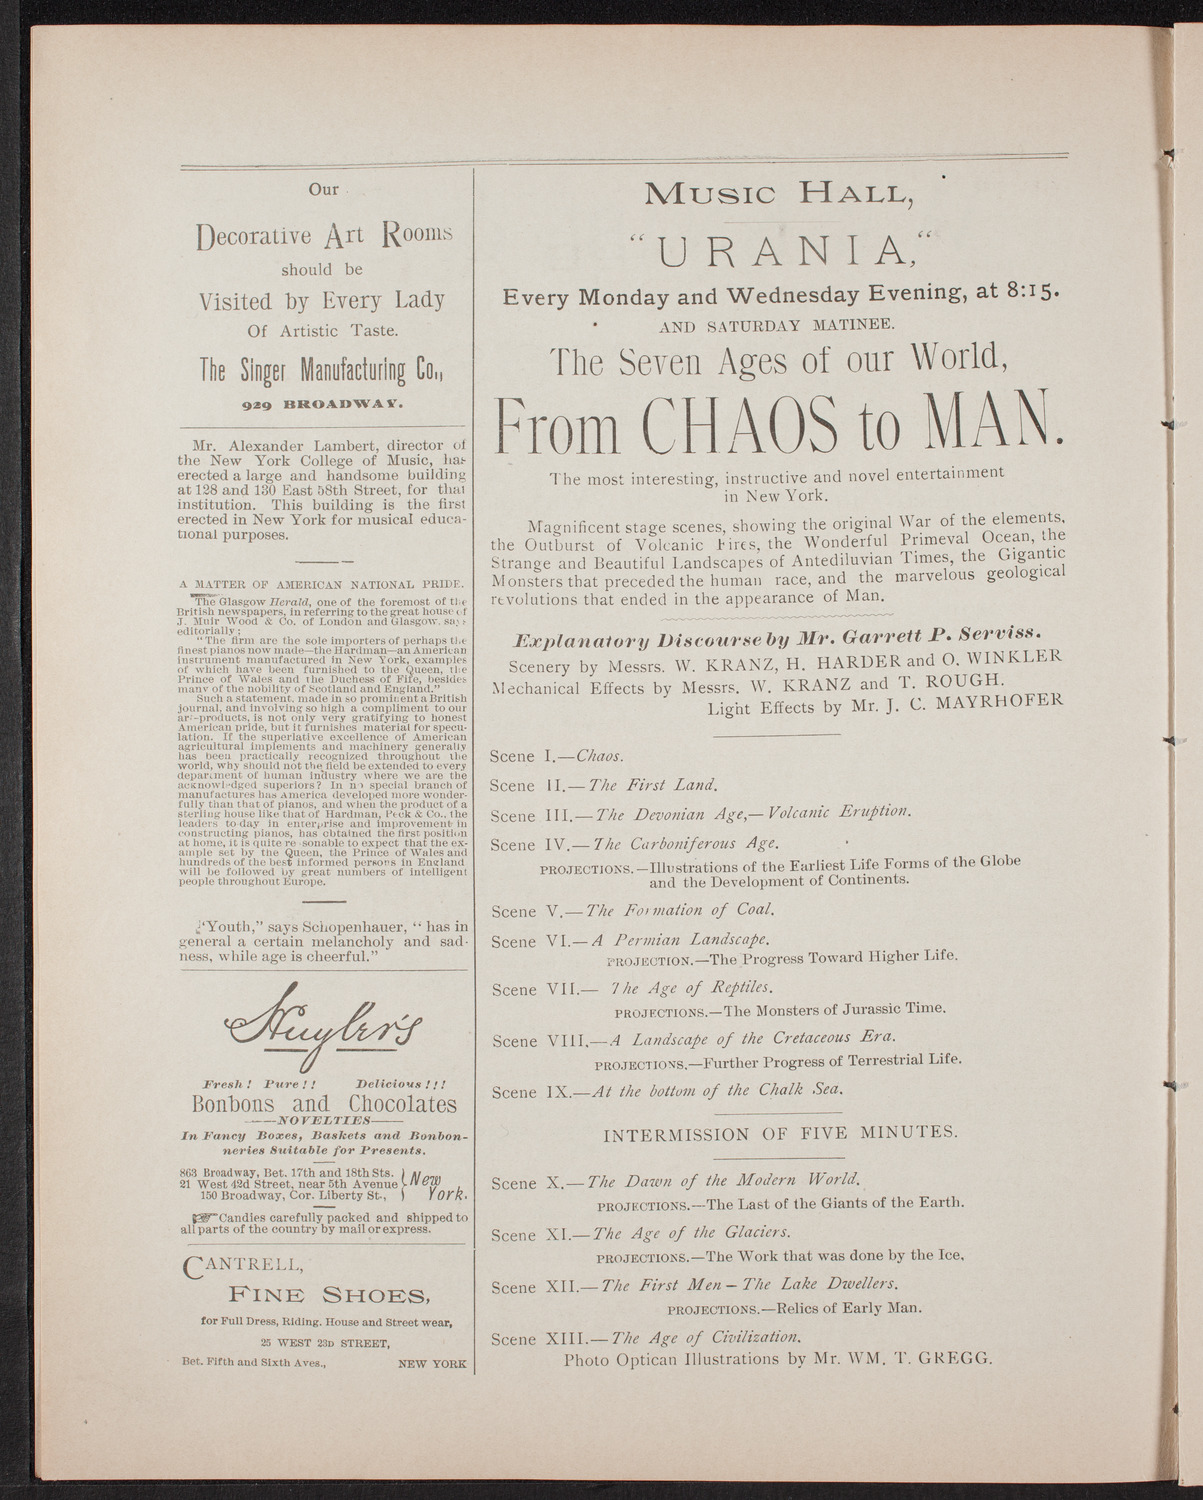 New York Symphony Orchestra: Handel Festival, April 28, 1892, program page 4